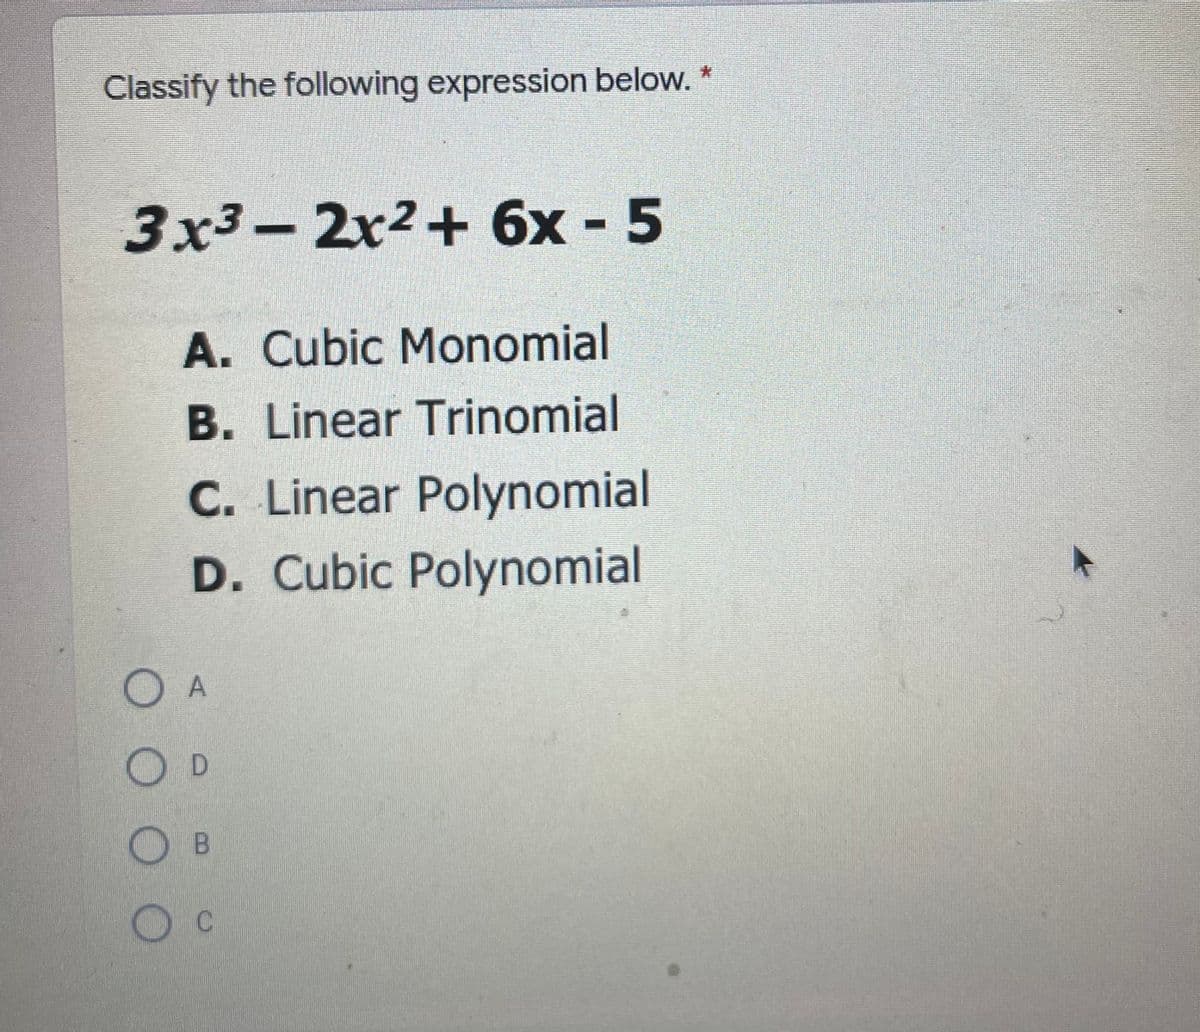 Classify the following expression below.
3x3-2x2+ 6x - 5
%3D
A. Cubic Monomial
B. Linear Trinomial
C. Linear Polynomial
D. Cubic Polynomial
O A
D
